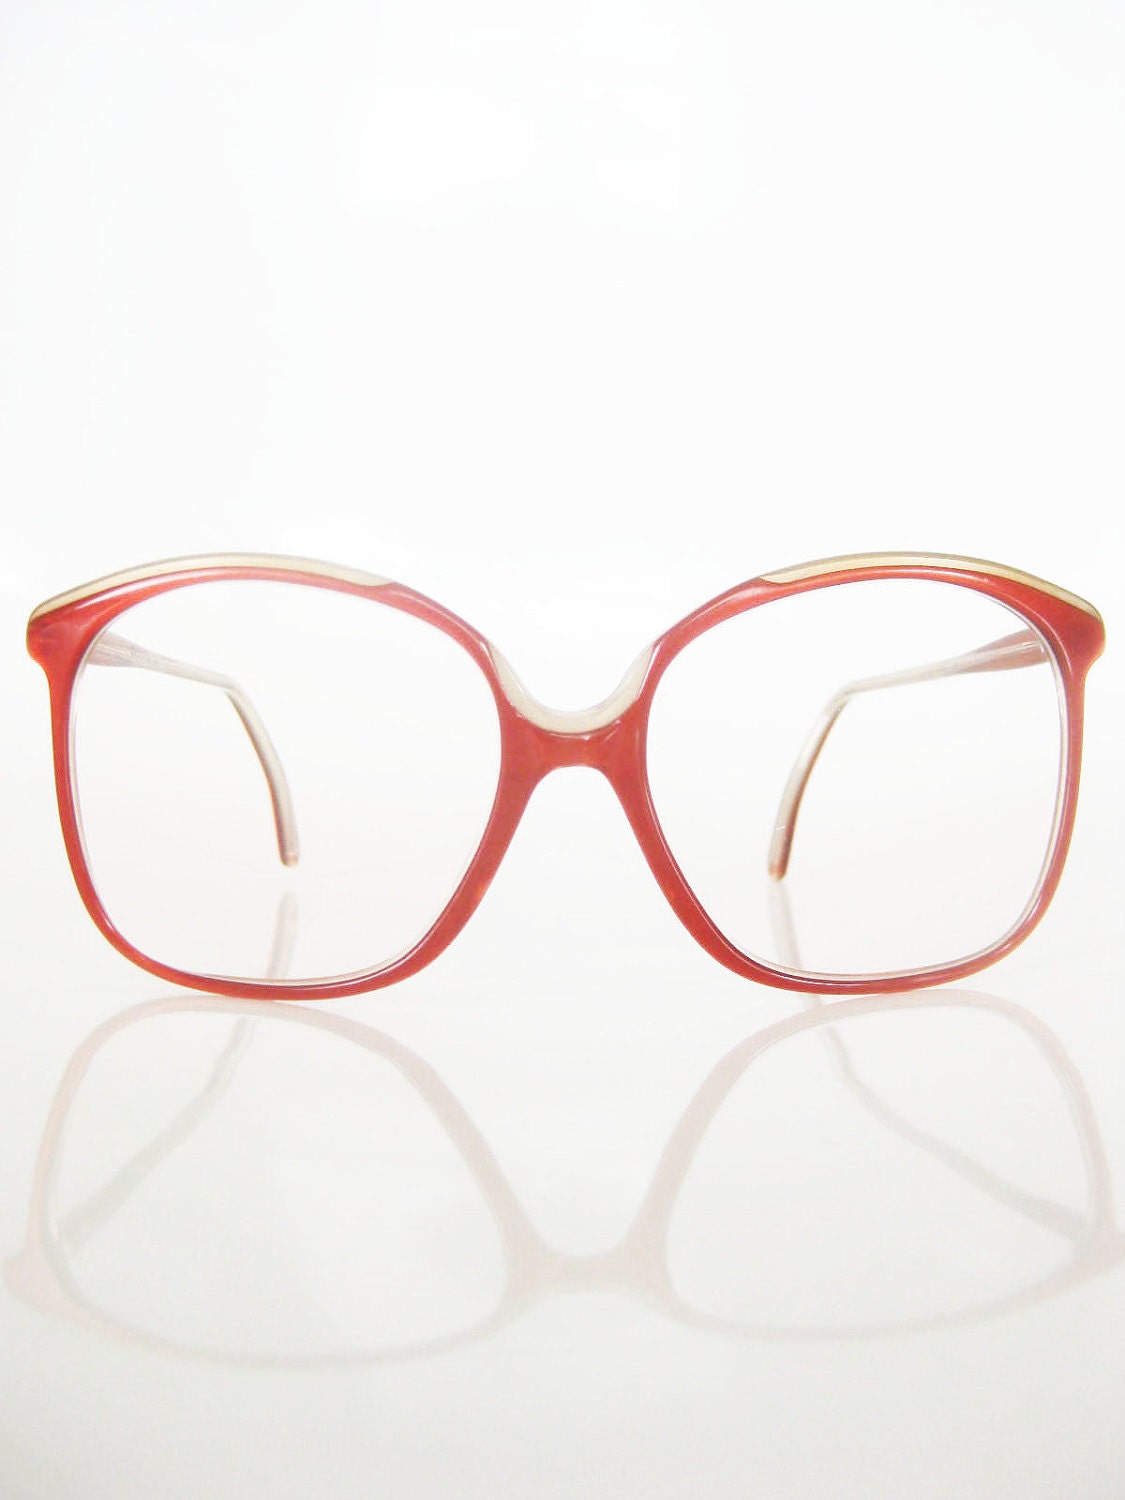 Vintage ITALIAN Oversized Optical Frames Eyeglasses Glasses Sunglasses 1970s 70s Seventies Indie HIPSTER Crimson